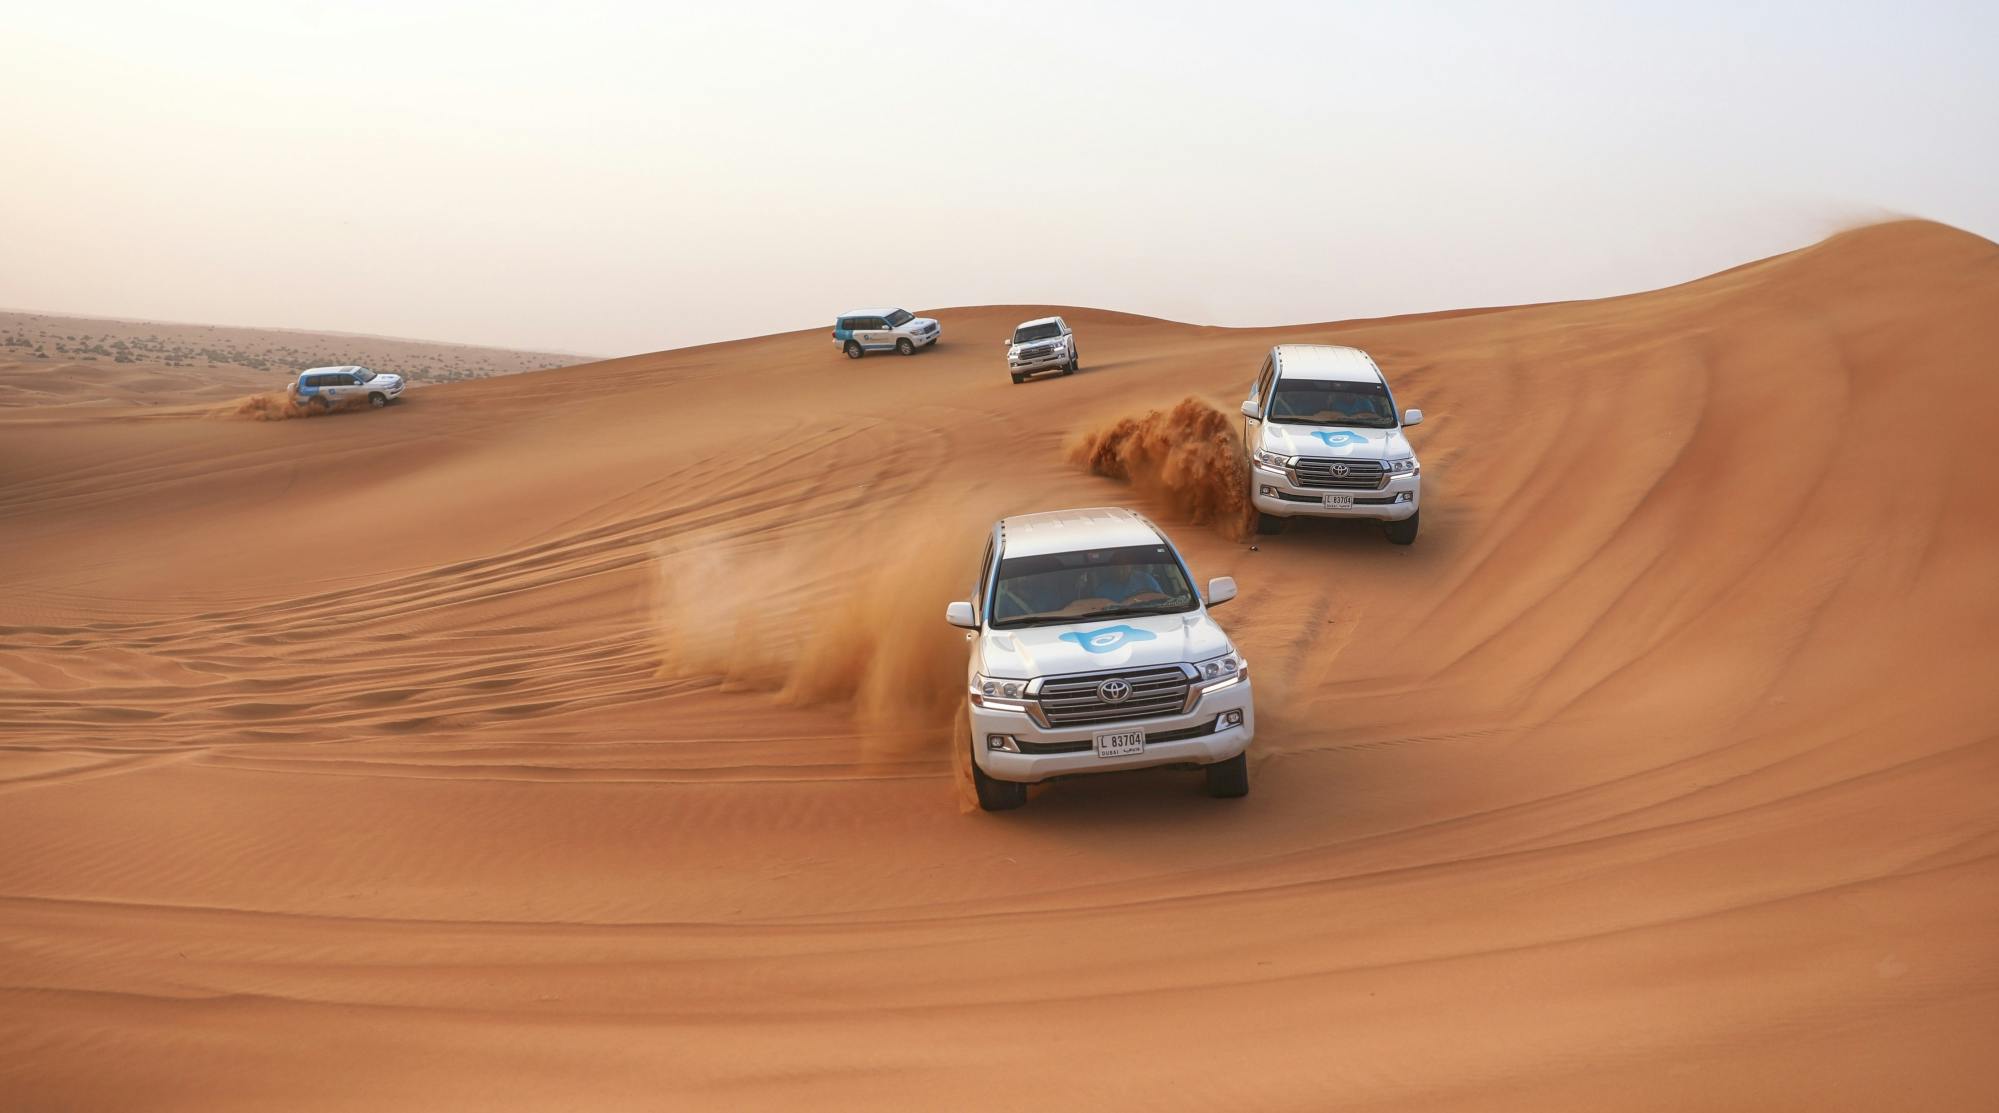 Dubai morning desert safari with dune bashing, sandboarding, camel ride